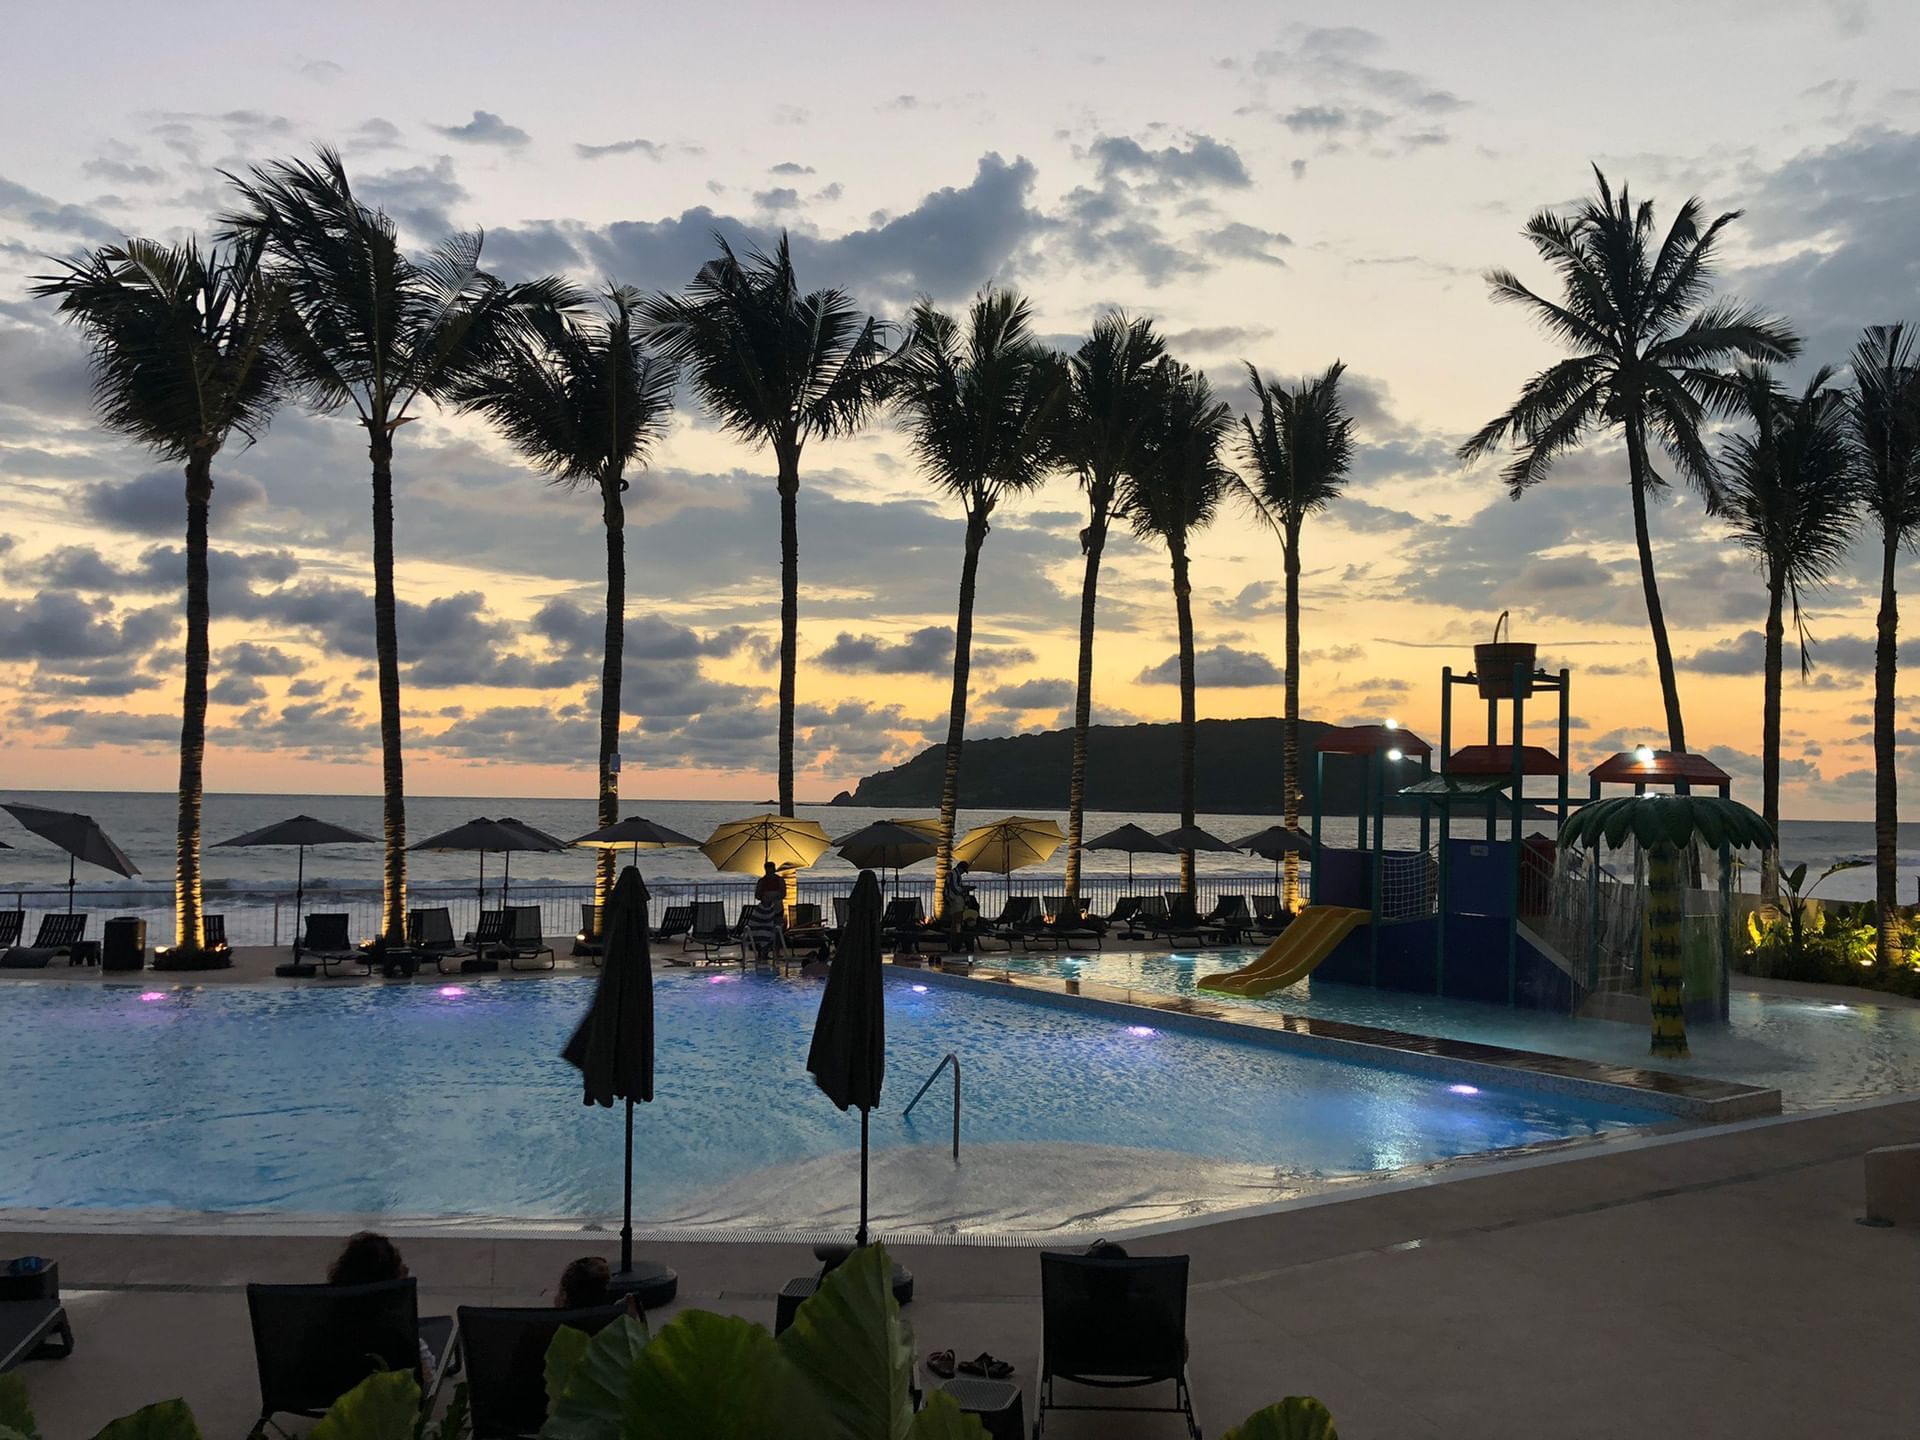 Evening view of the pool at Viaggio Resort Mazatlan